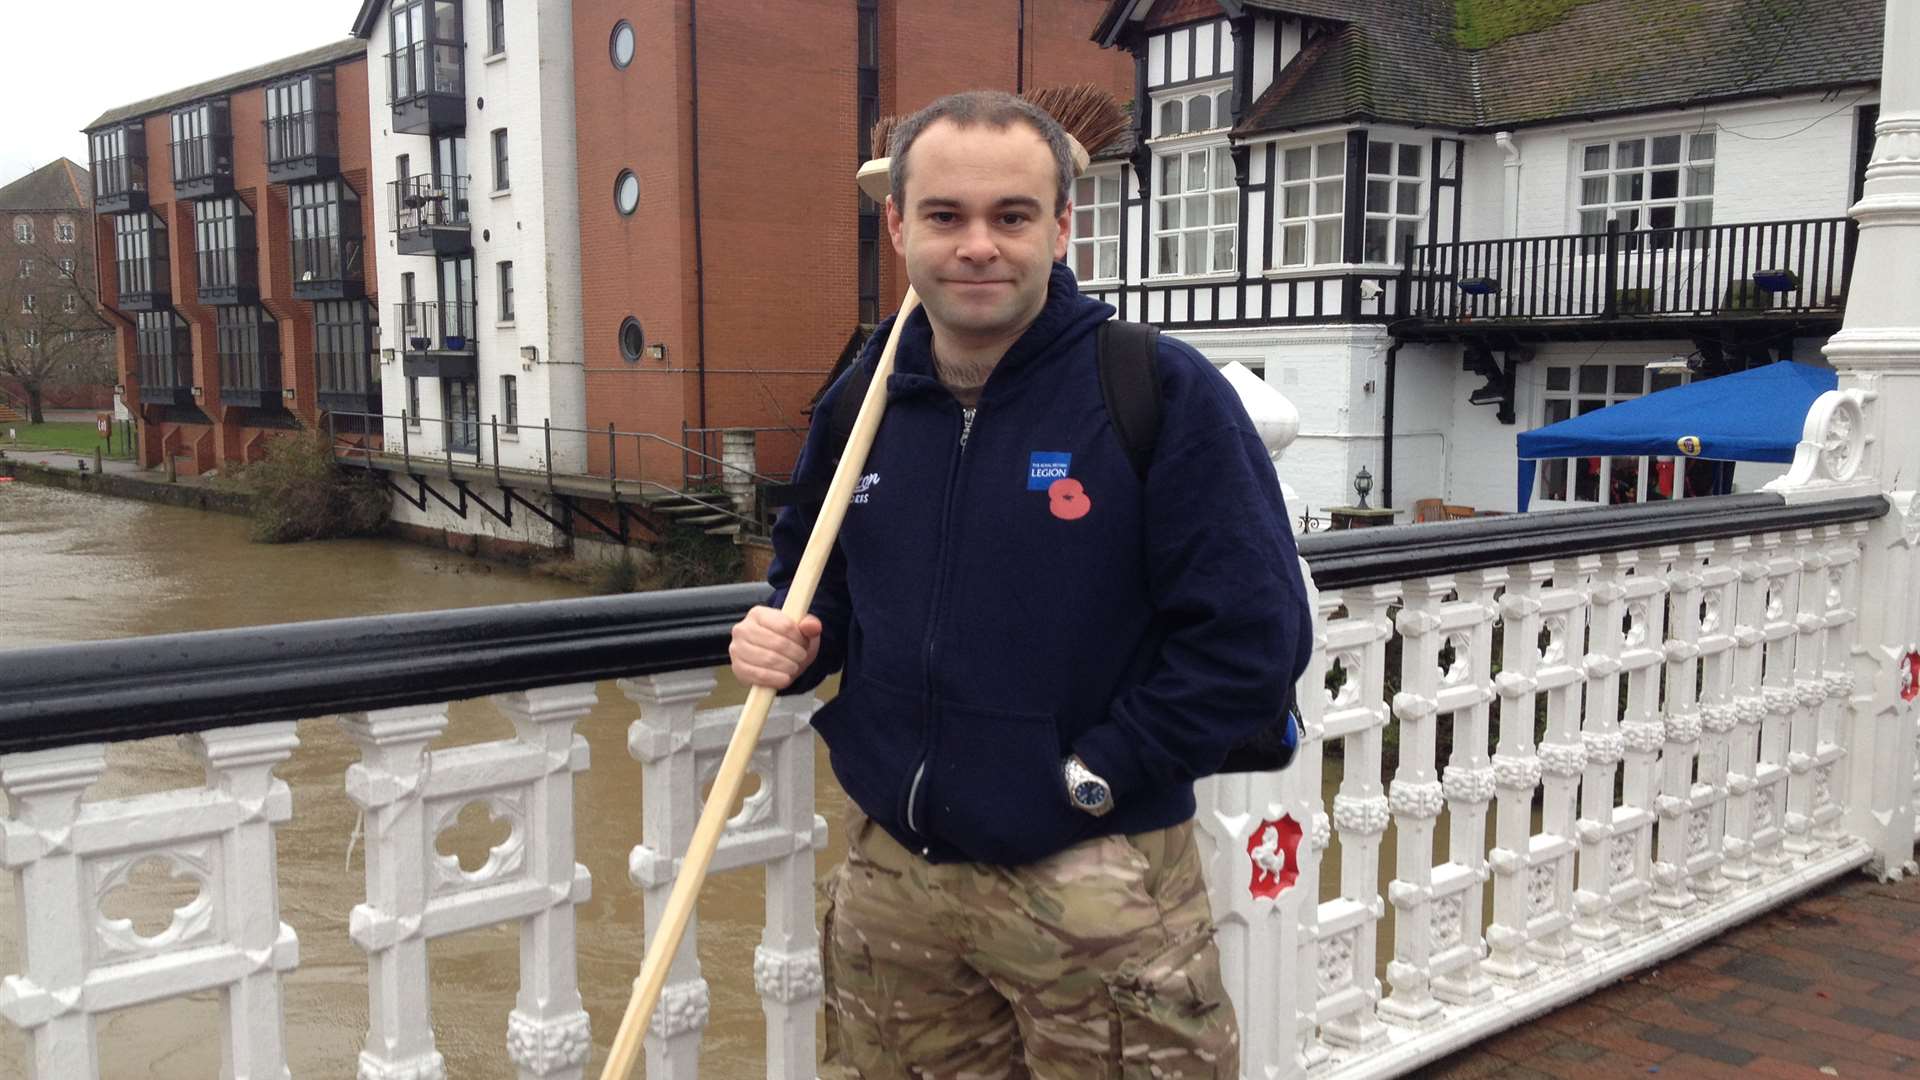 Carl Lewis helped mop up after flood damage in Tonbridge in 2013